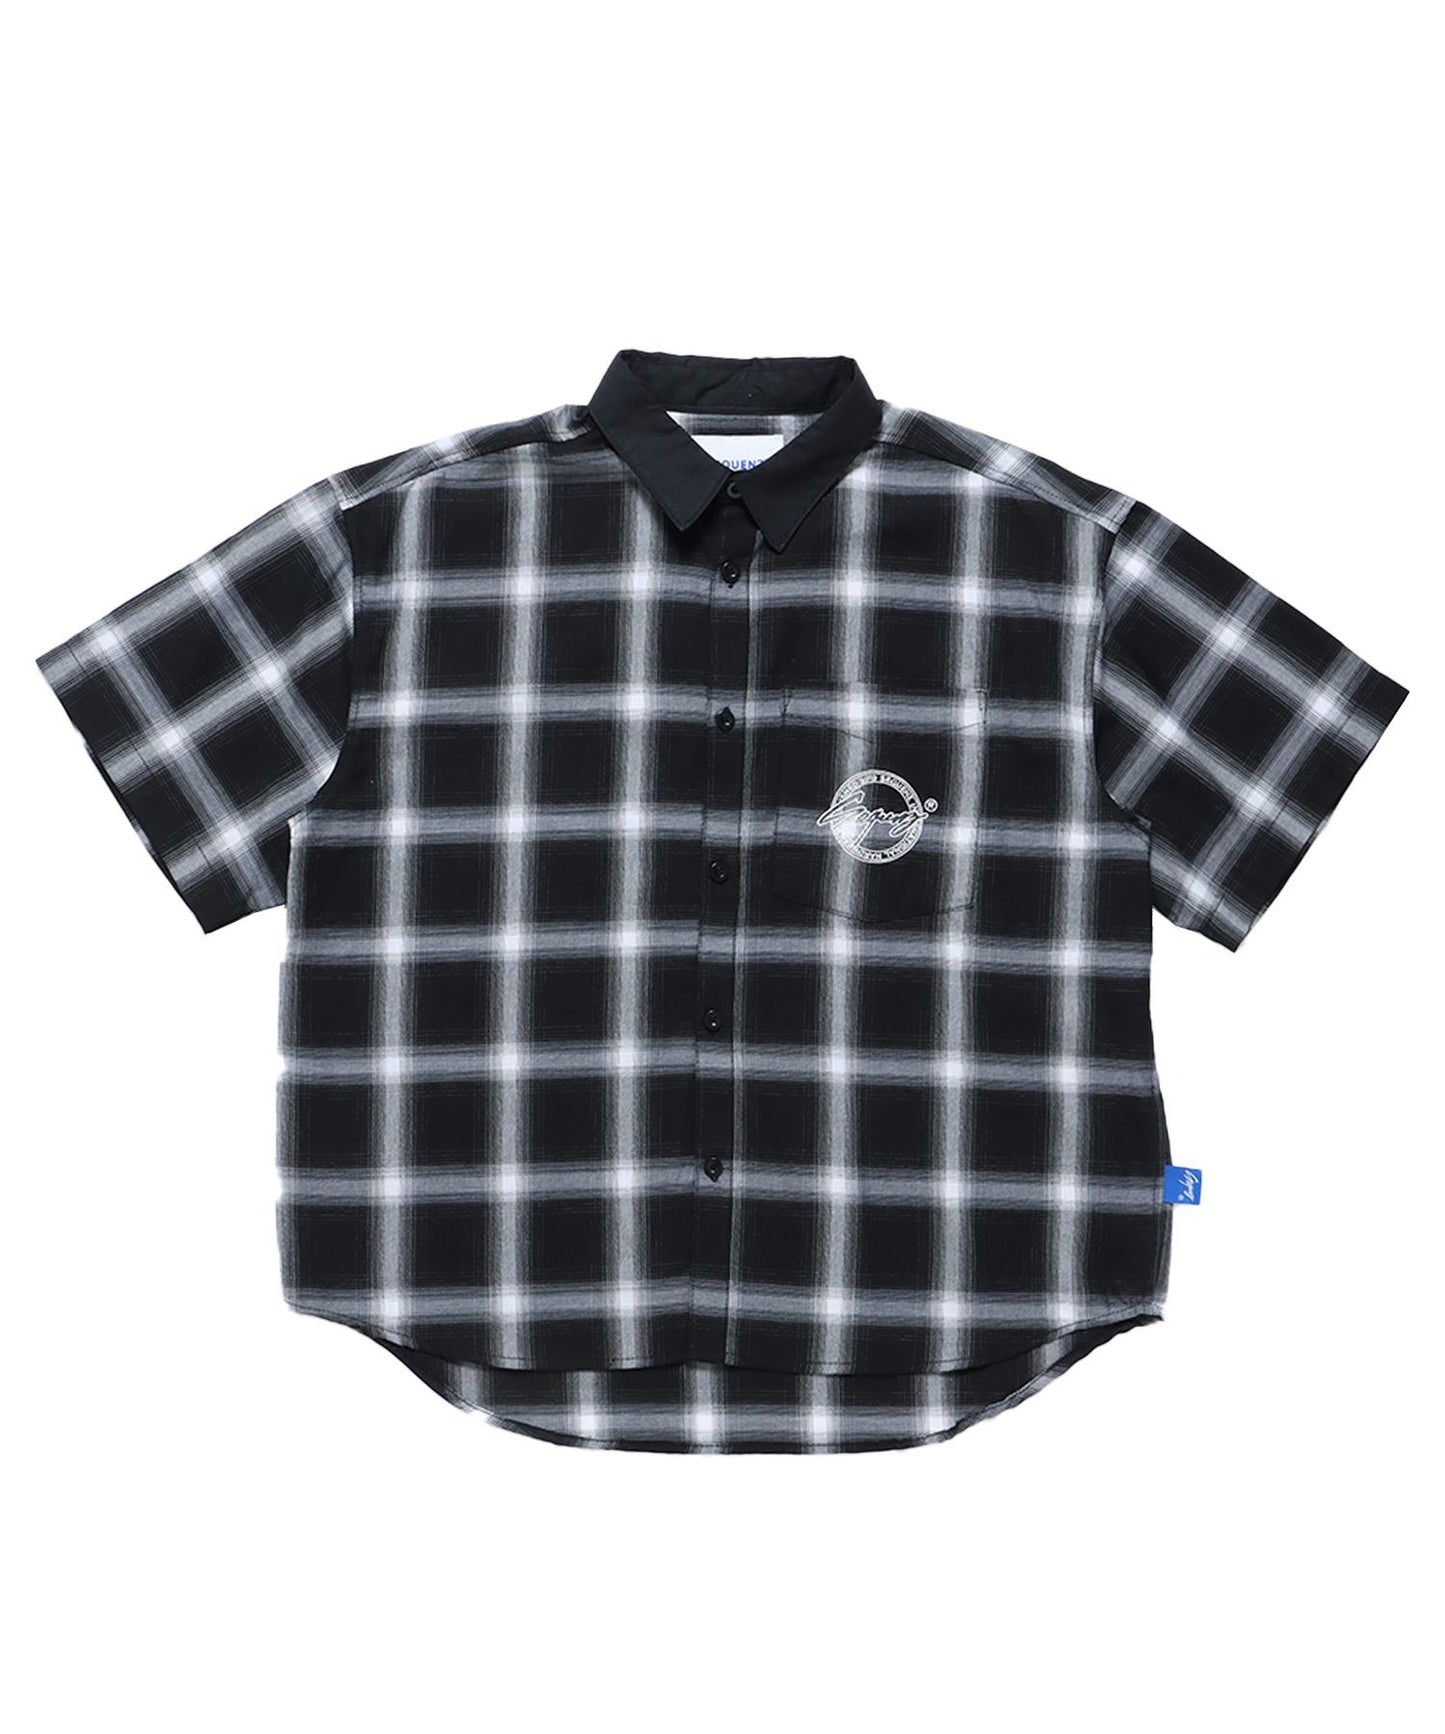 【SEQUENZ】CHECK CLERIC S/S SHIRT / 半袖シャツ オープンカラー オンブレチェック サークルロゴ ブランド ワンポイント 柄80